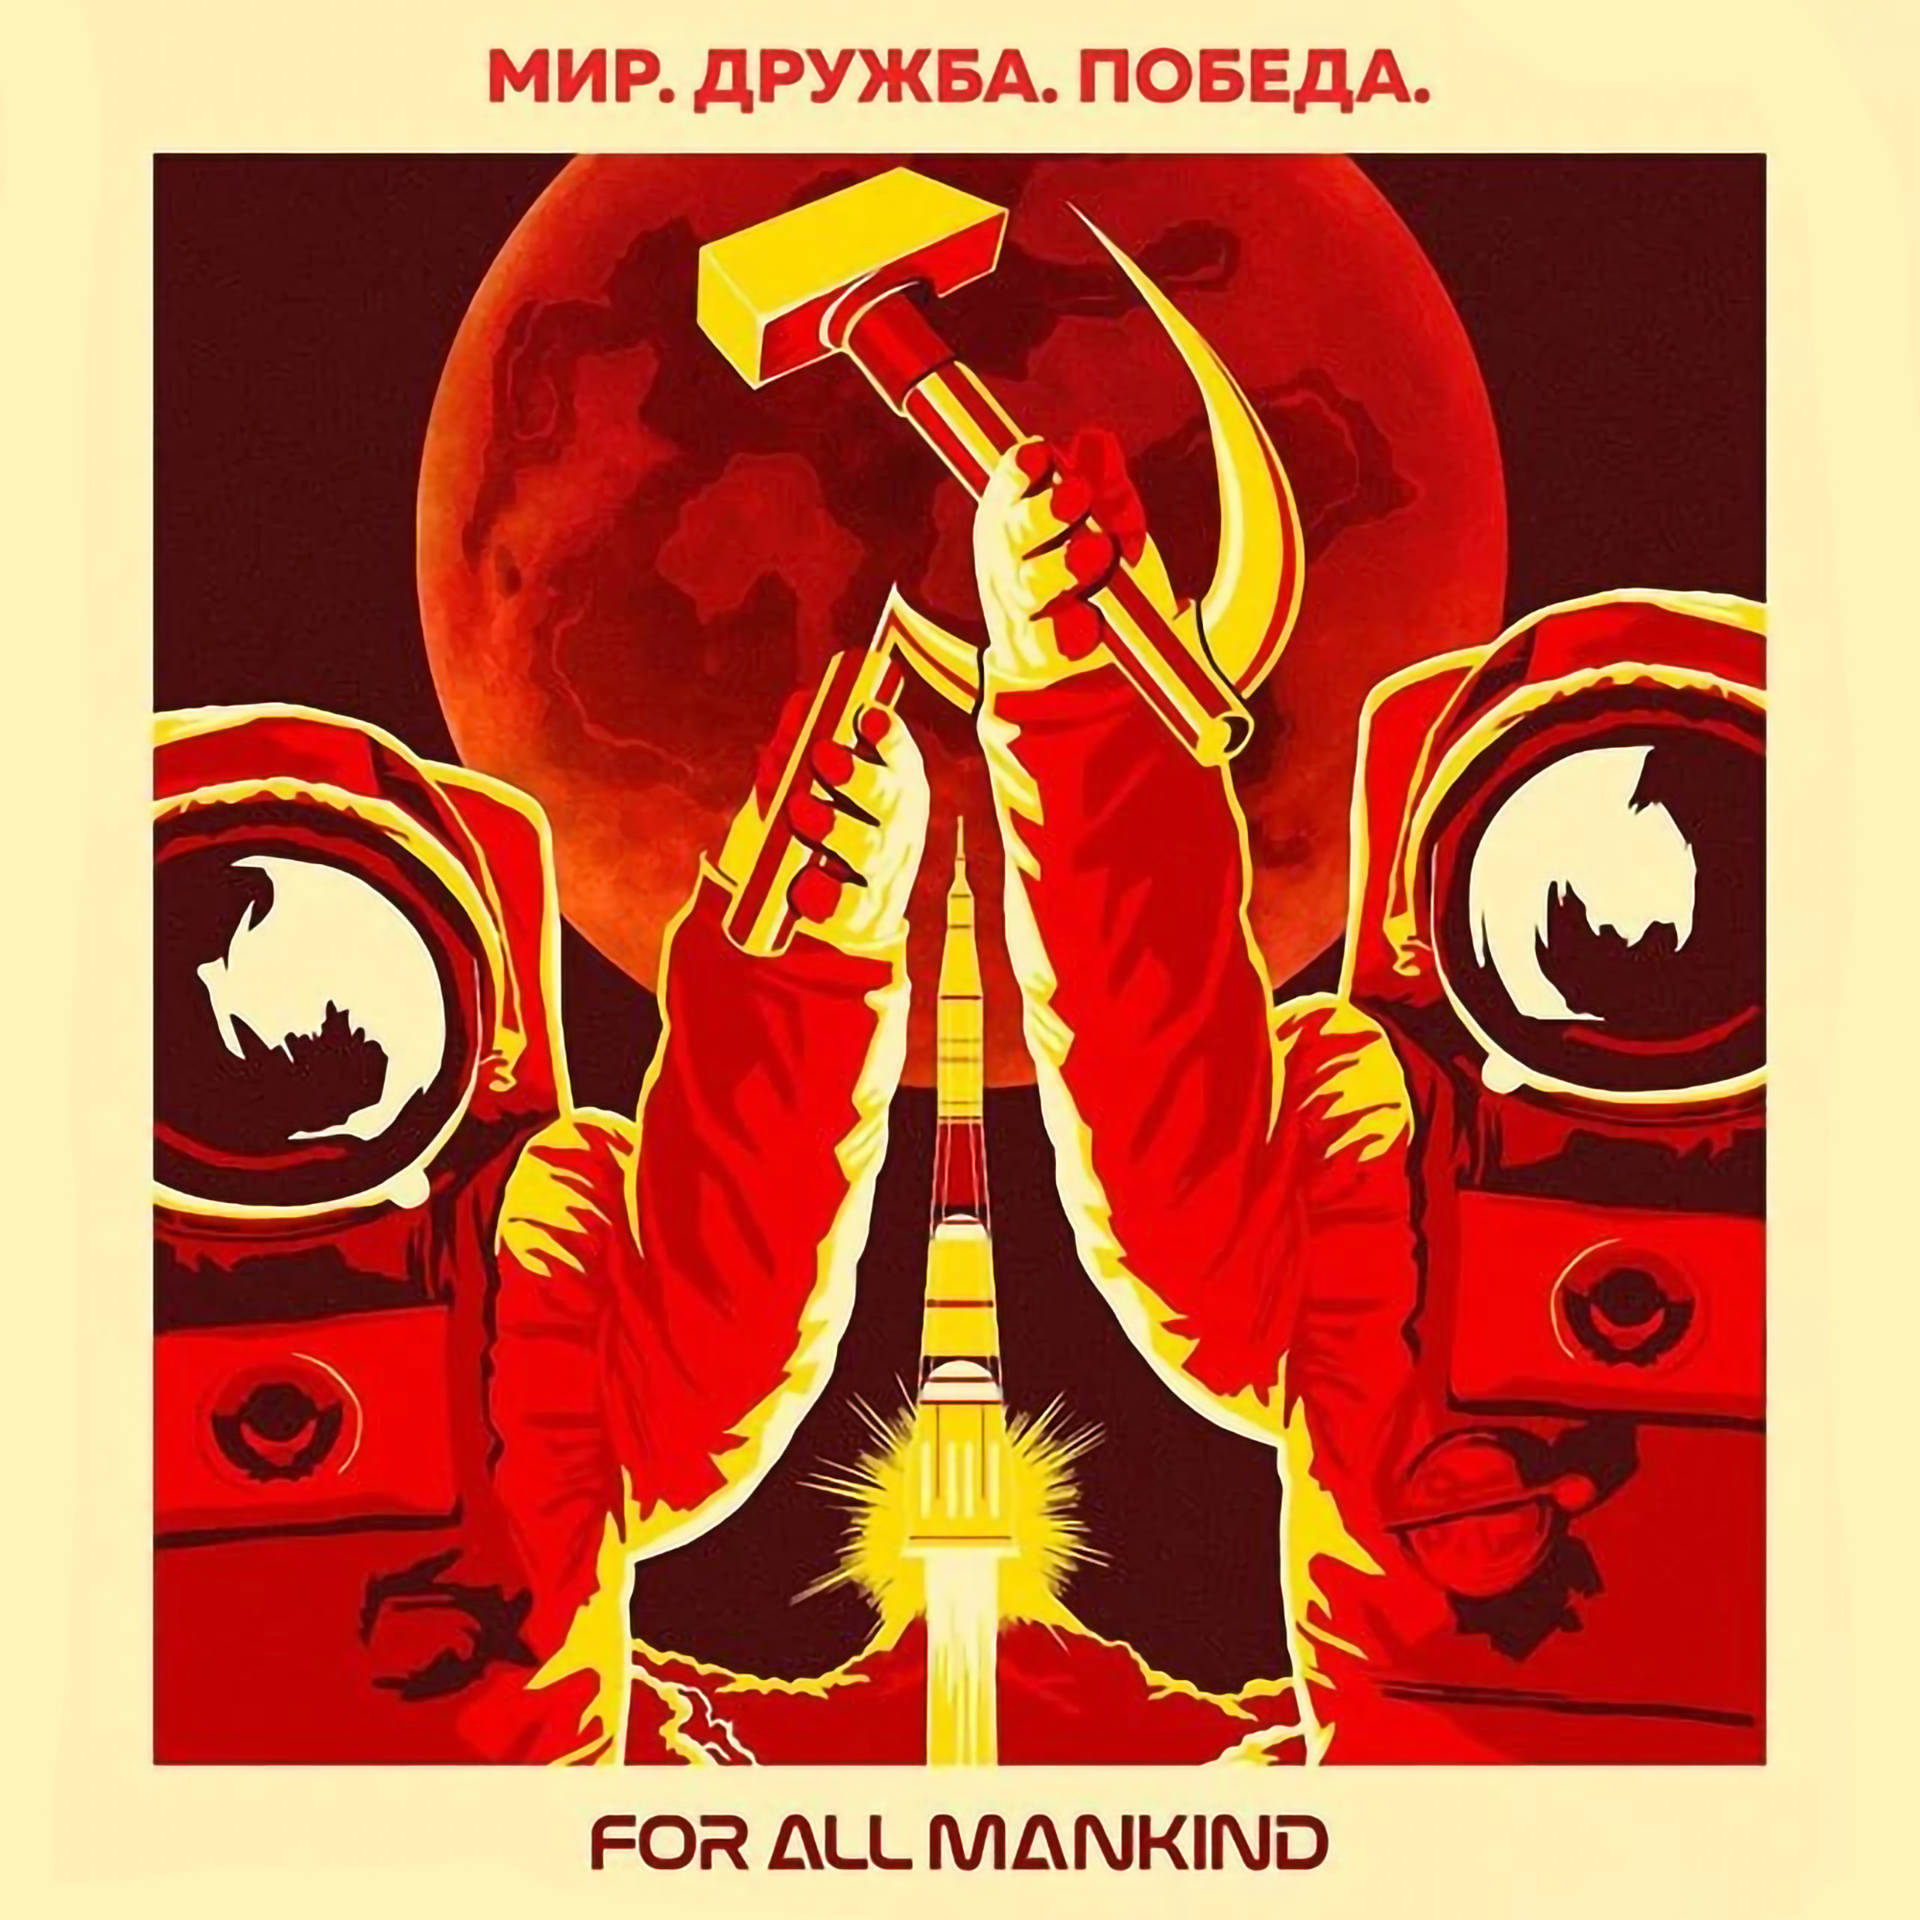 For All Mankind USSR Fanart Wallpaper